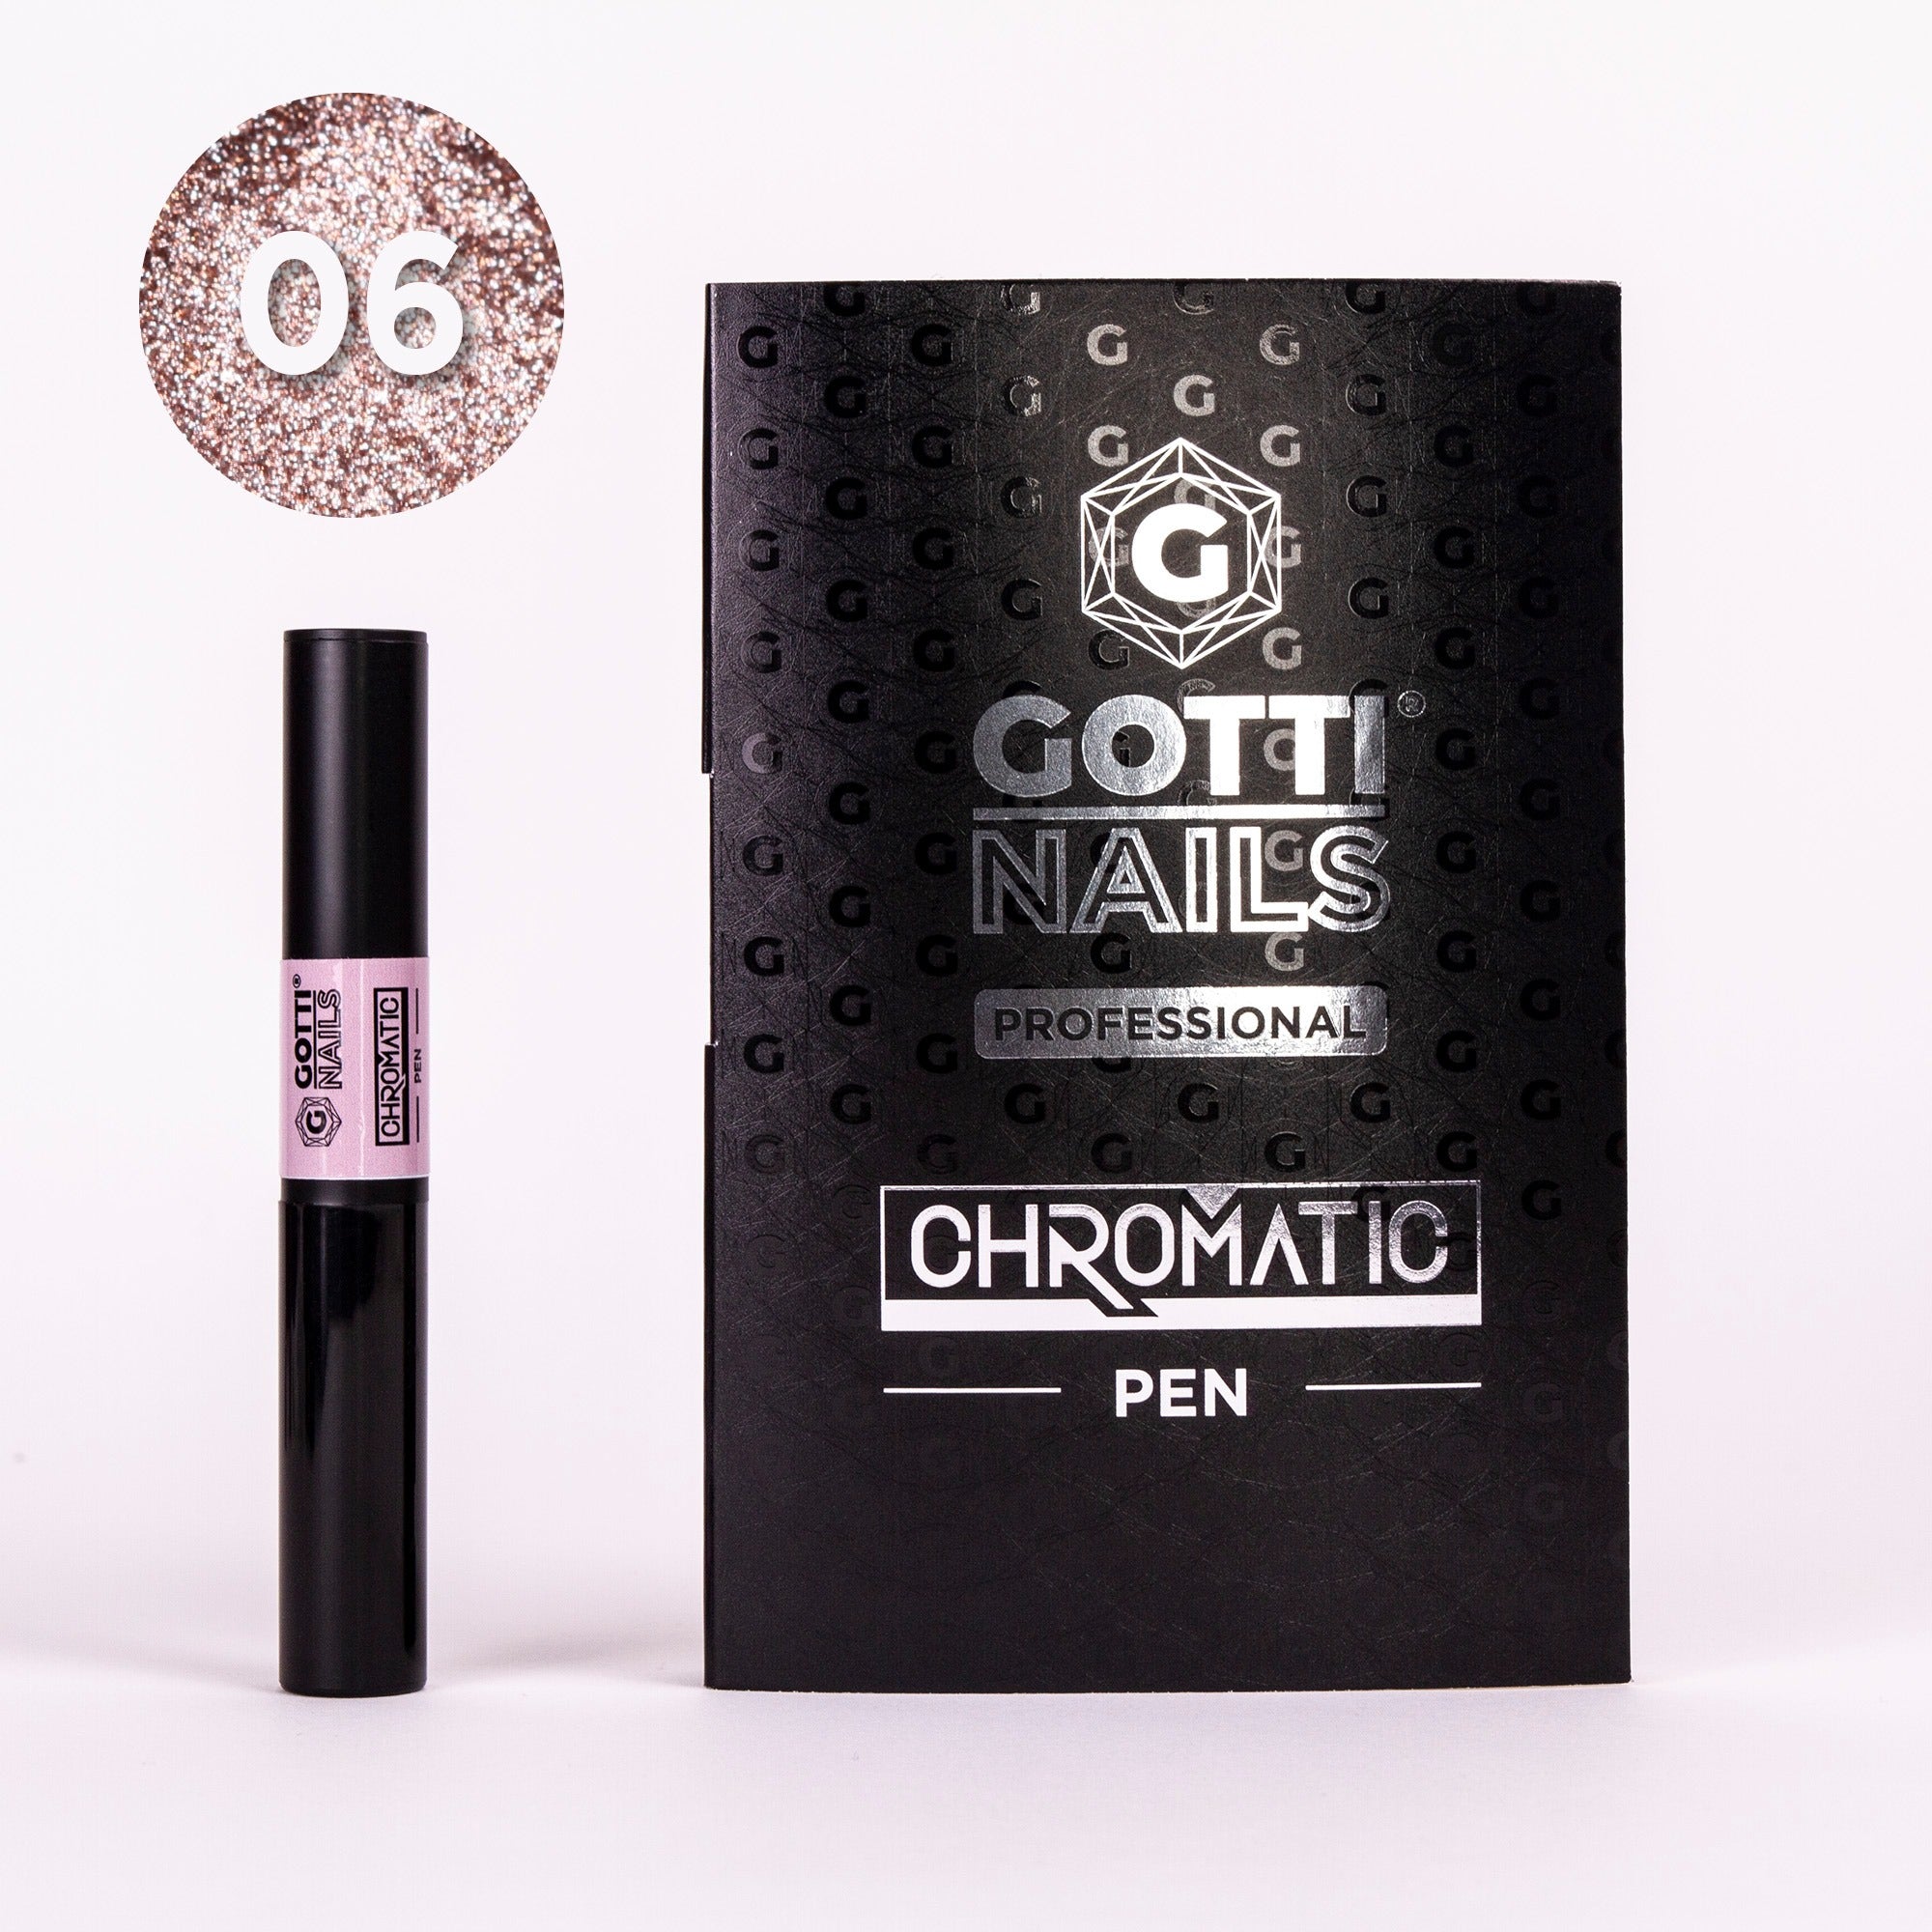 Chromatic Pen #06 by Gotti Nails